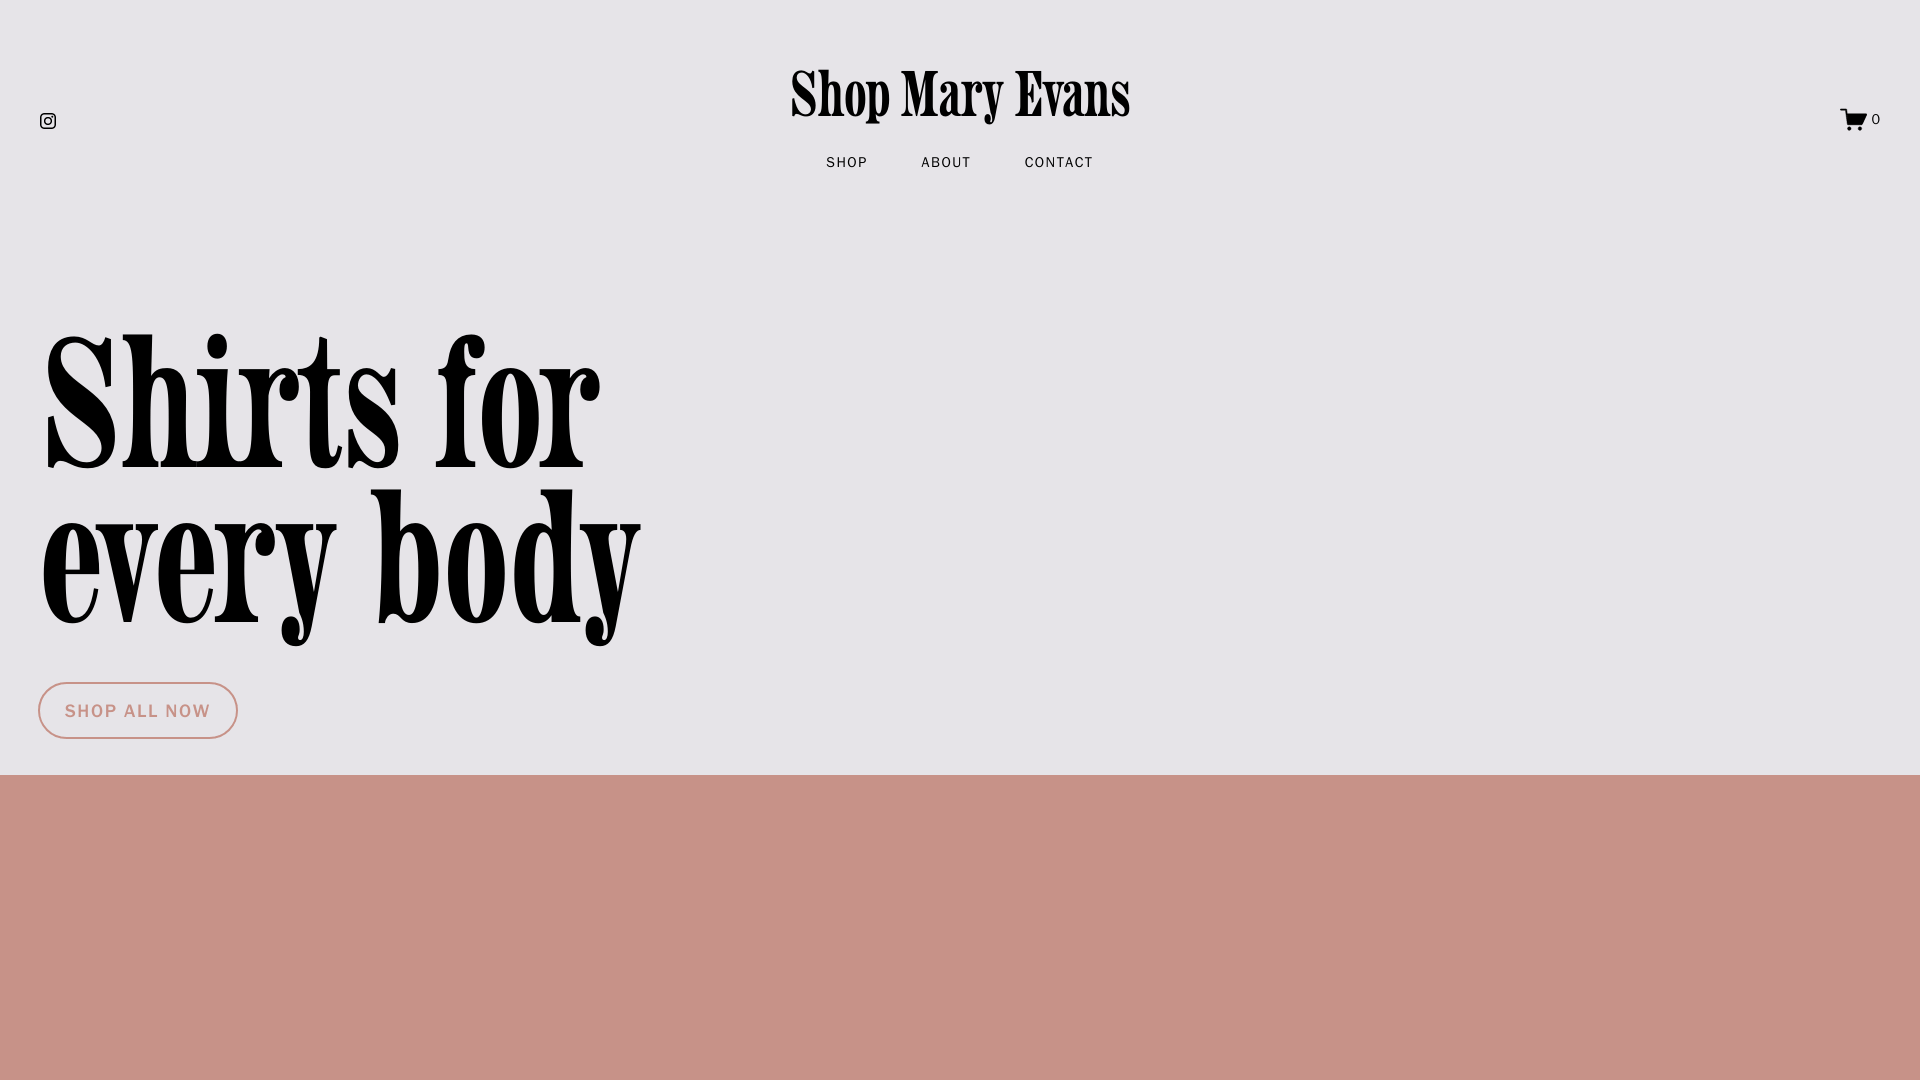 Screenshot of the Shop Mary Evans website